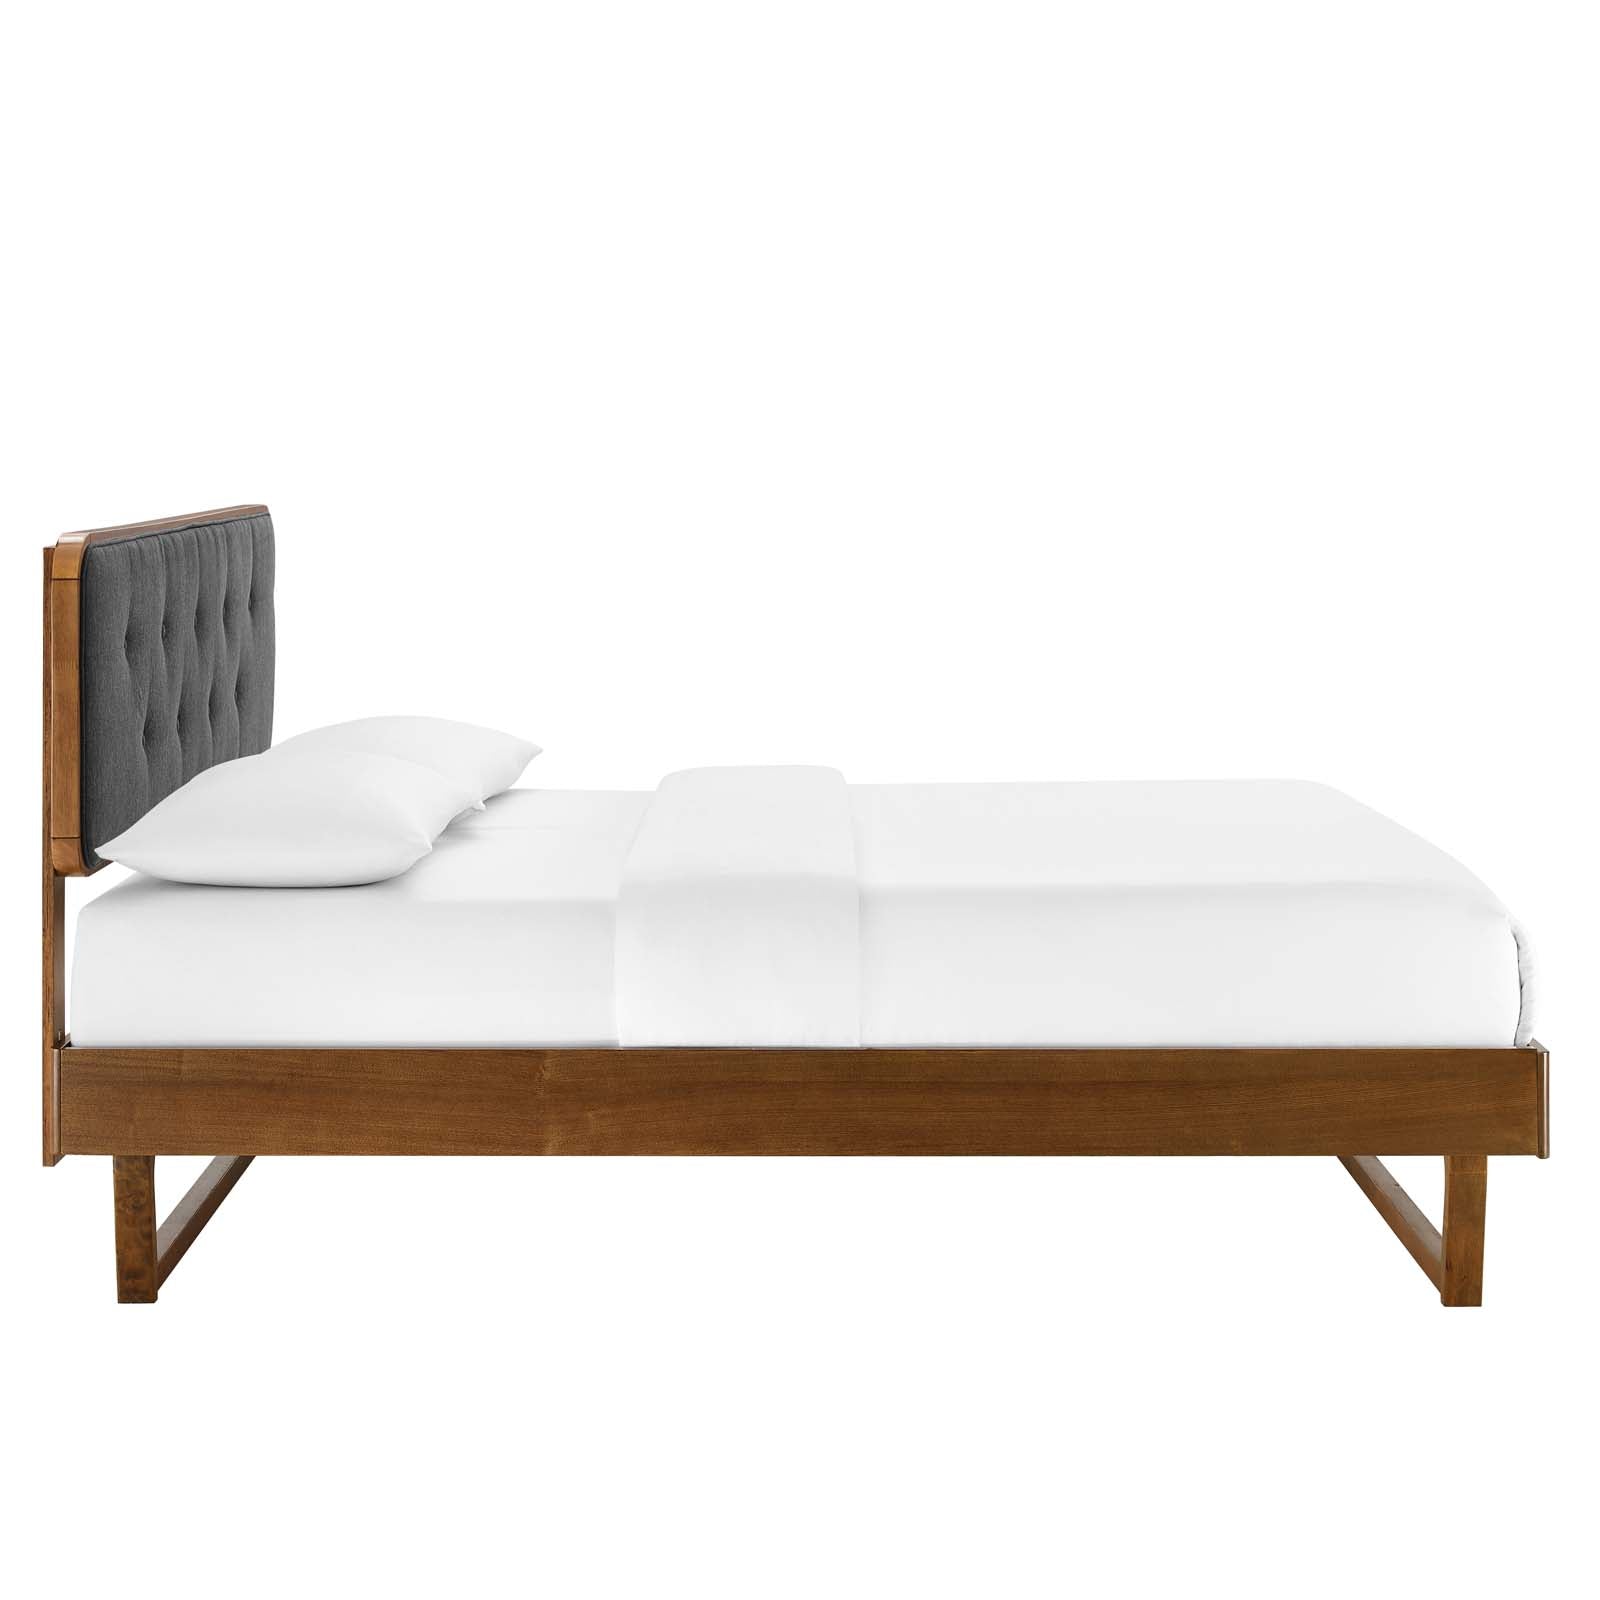 Bridgette Queen Wood Platform Bed With Angular Frame - East Shore Modern Home Furnishings